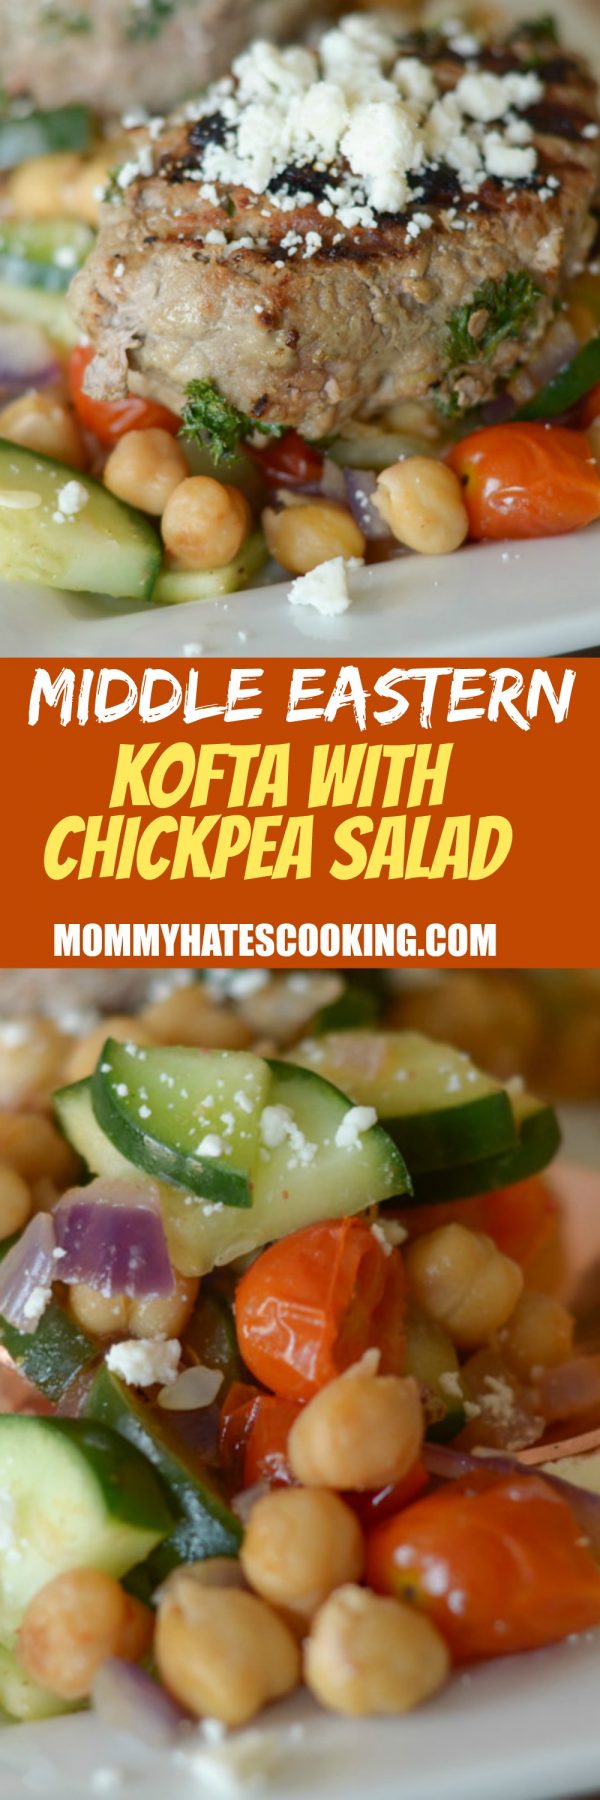 Kofta with Chickpea Salad